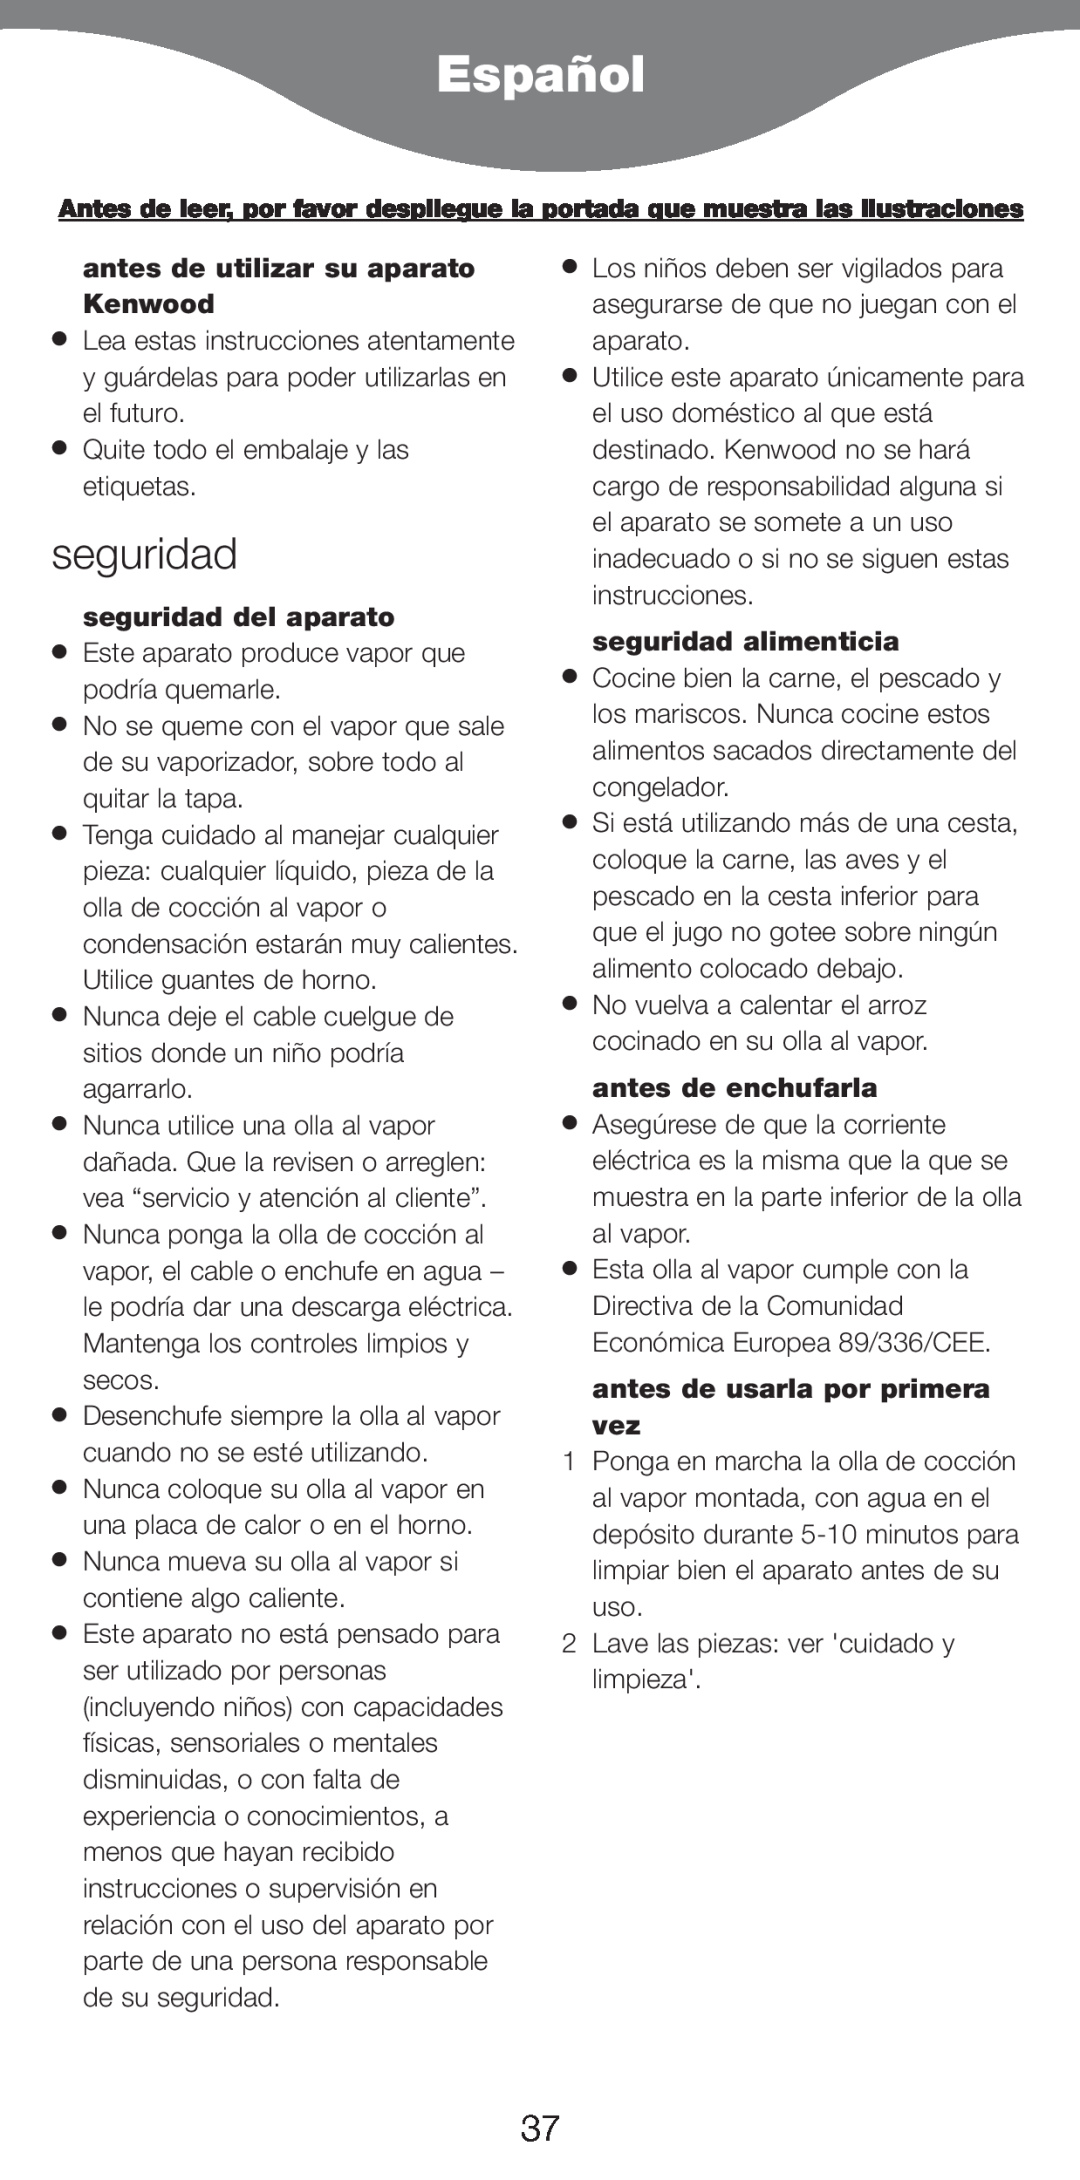 Kenwood FS620 manual Español, antes de utilizar su aparato Kenwood, seguridad del aparato, seguridad alimenticia 